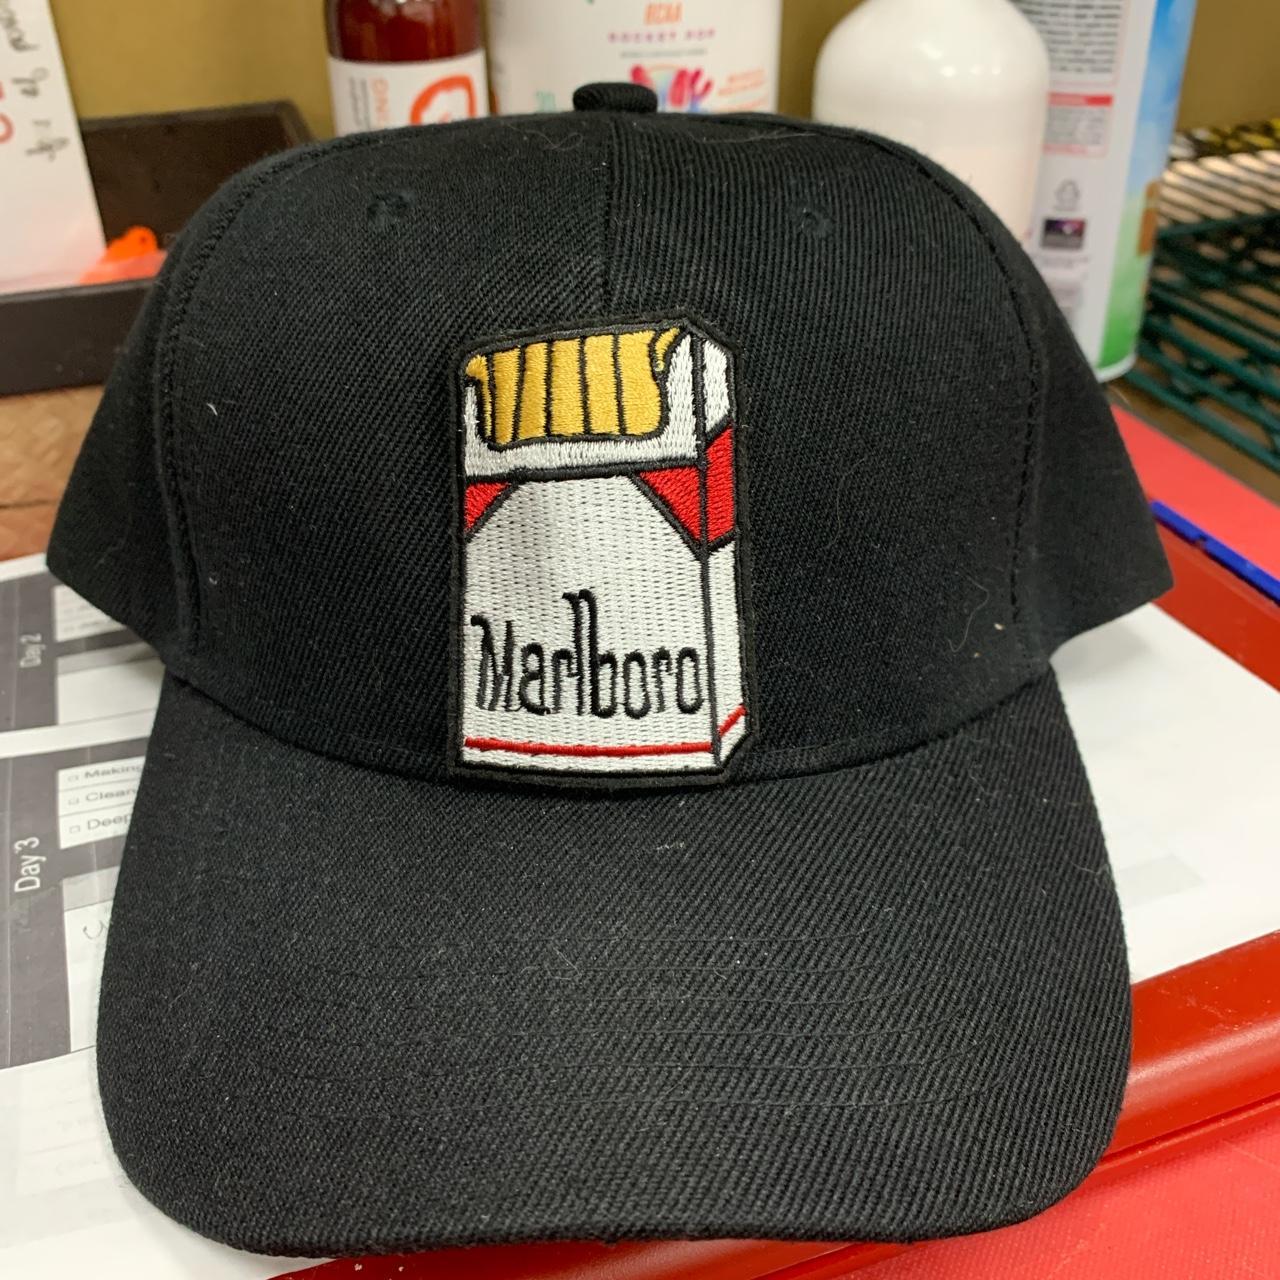 Marlboro pack Velcro hat